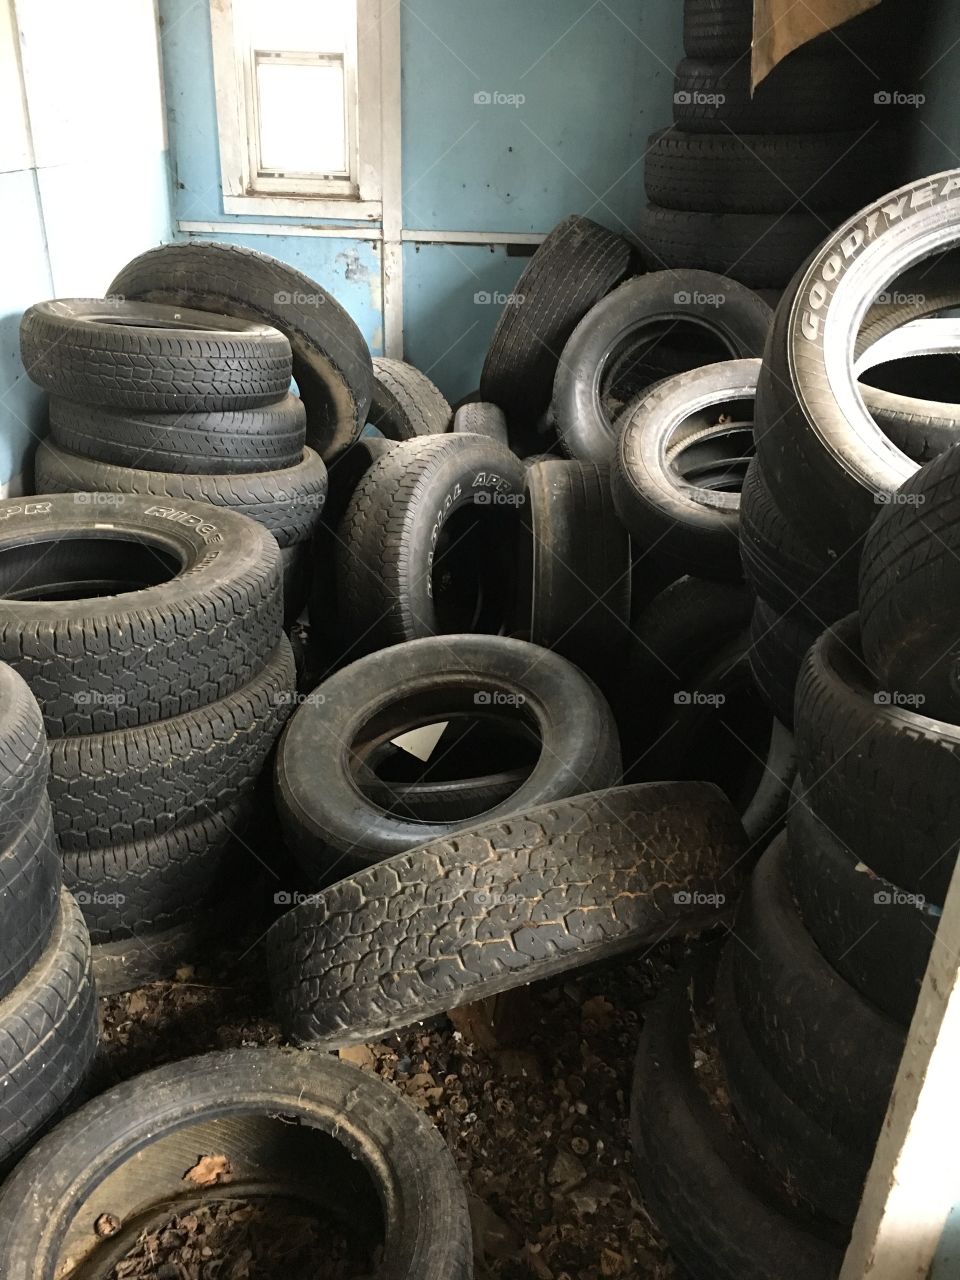 Tires anyone?